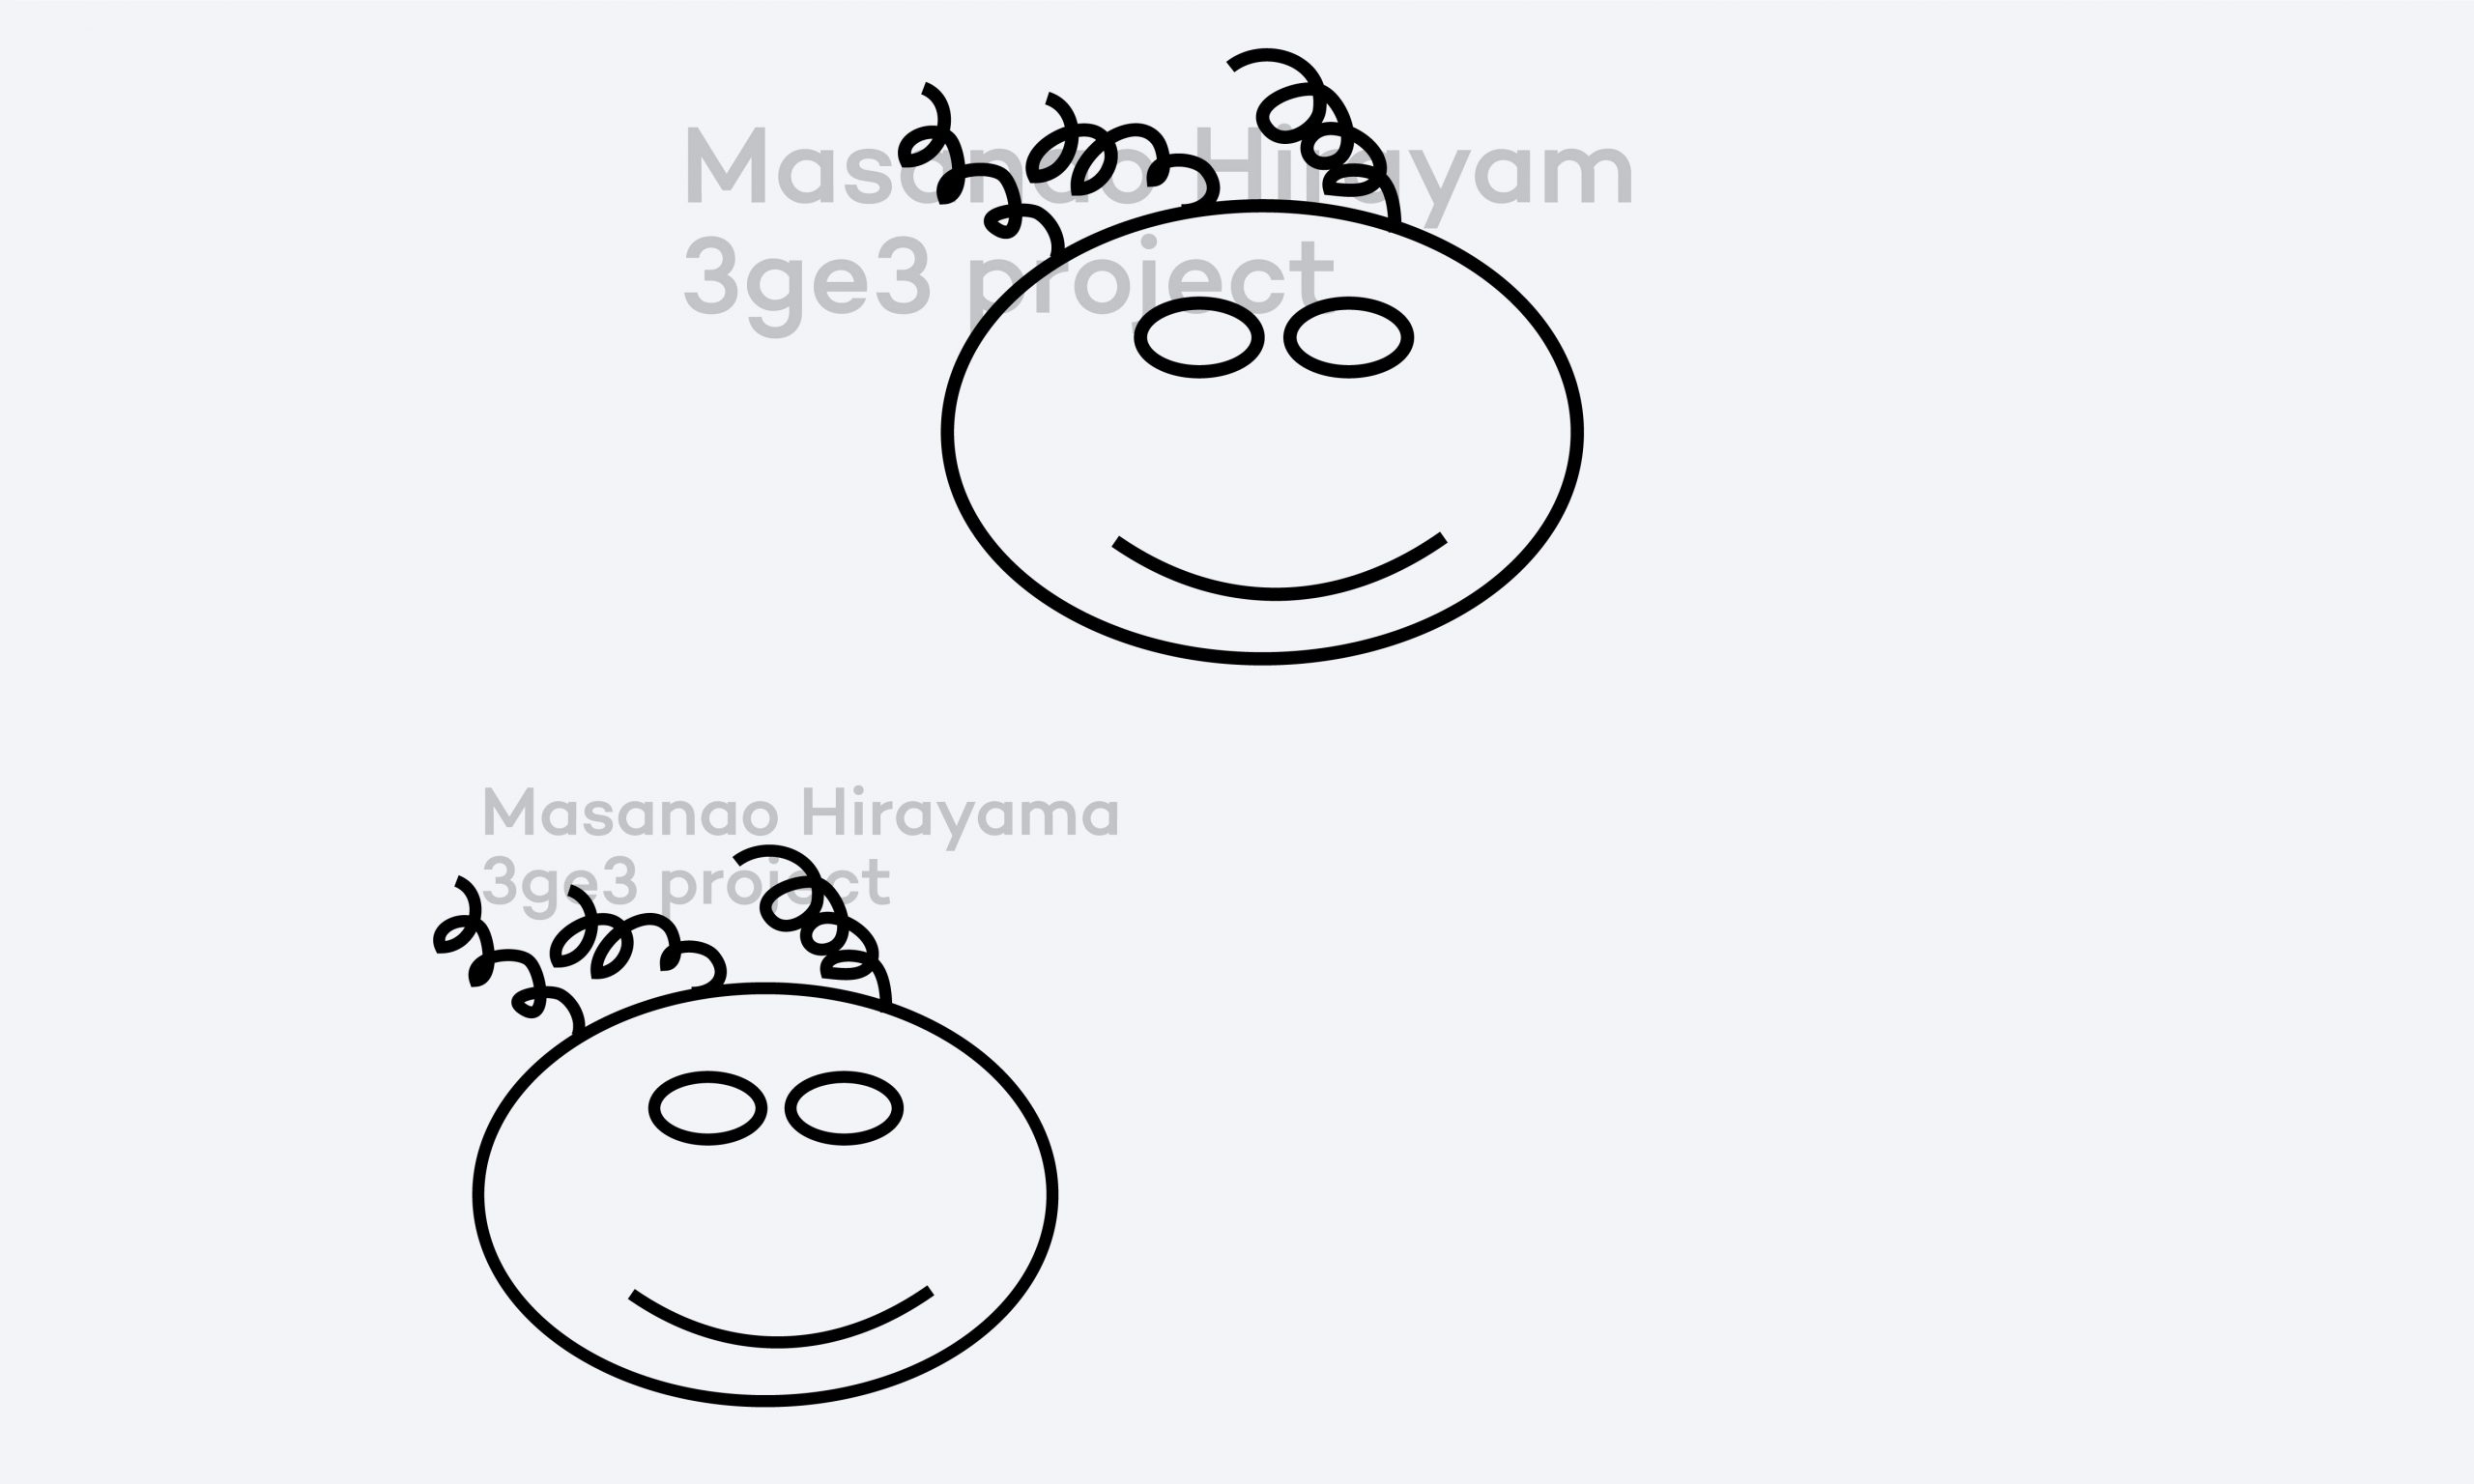 Masanao Hirayama 3ge3 project 登陆成都 CLAP 发售